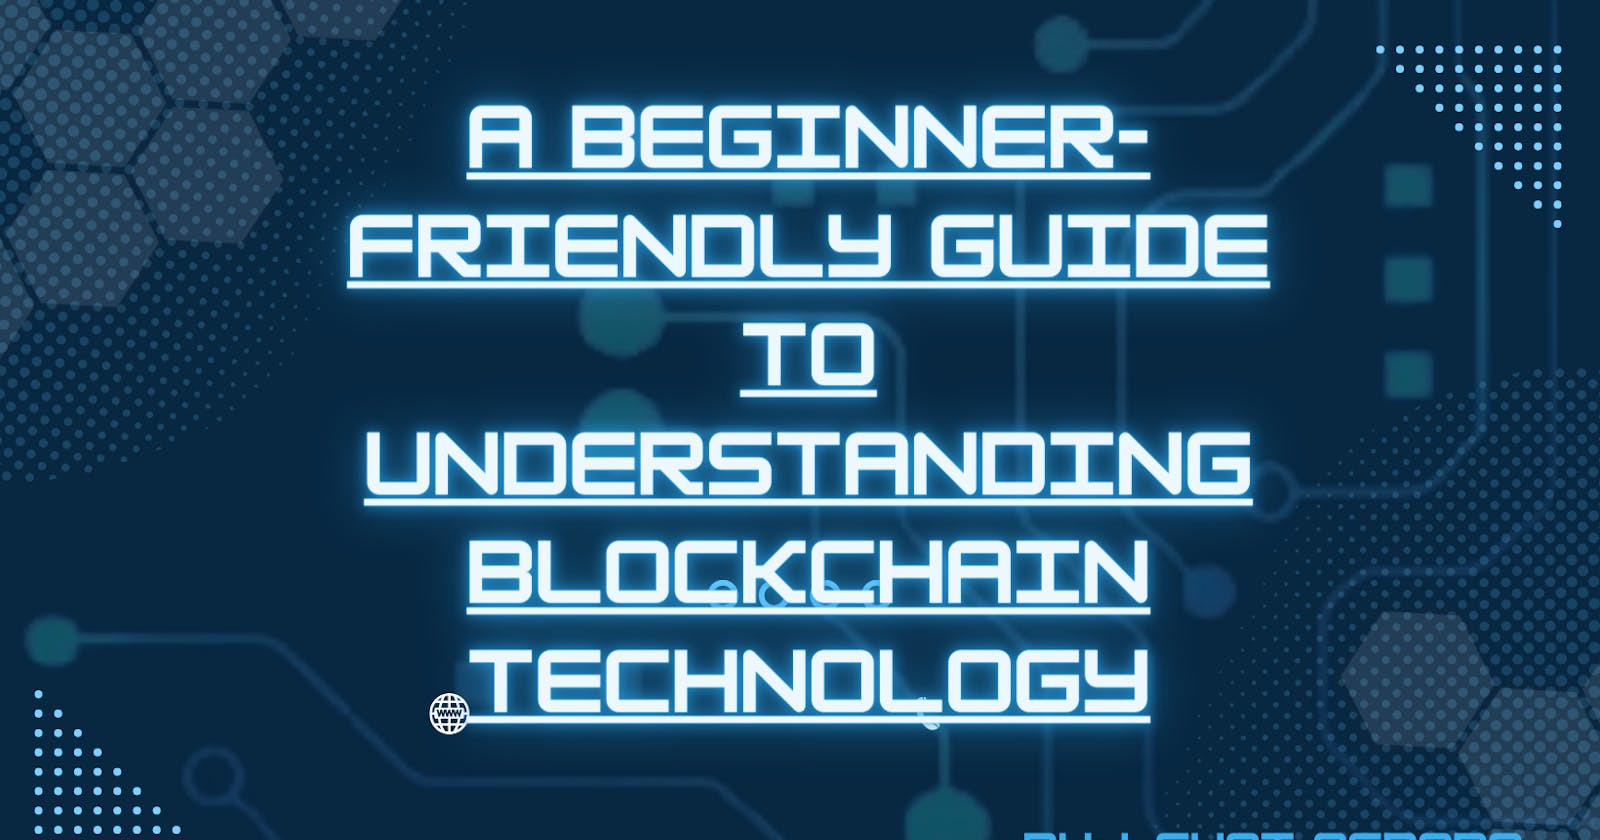 A beginner-friendly guide to understanding Blockchain Technology